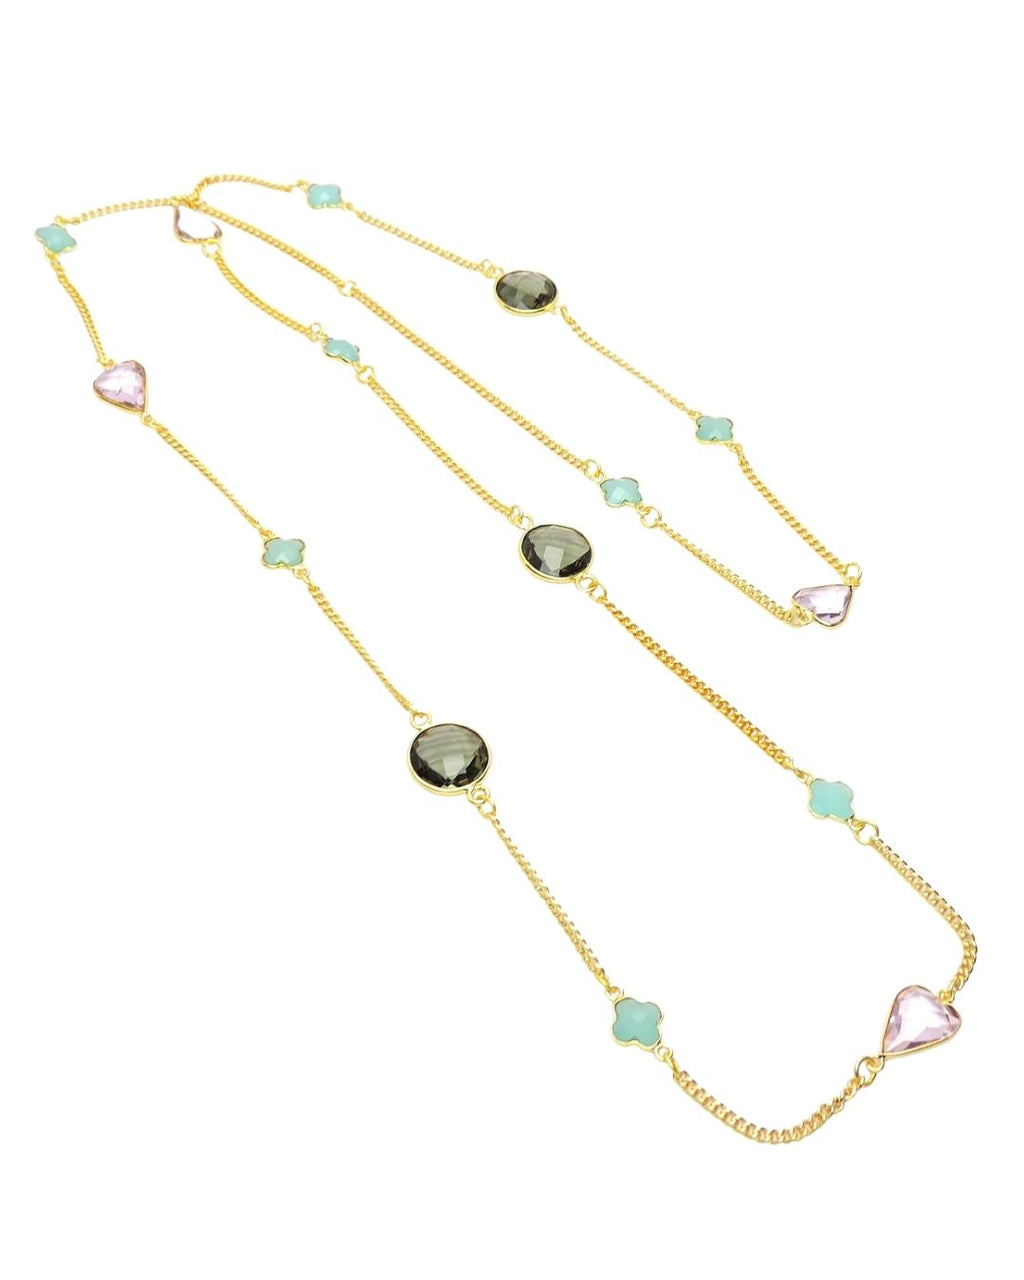 Imani Necklace - Necklaces - Handcrafted Jewellery - Made in India - Dubai Jewellery, Fashion & Lifestyle - Dori